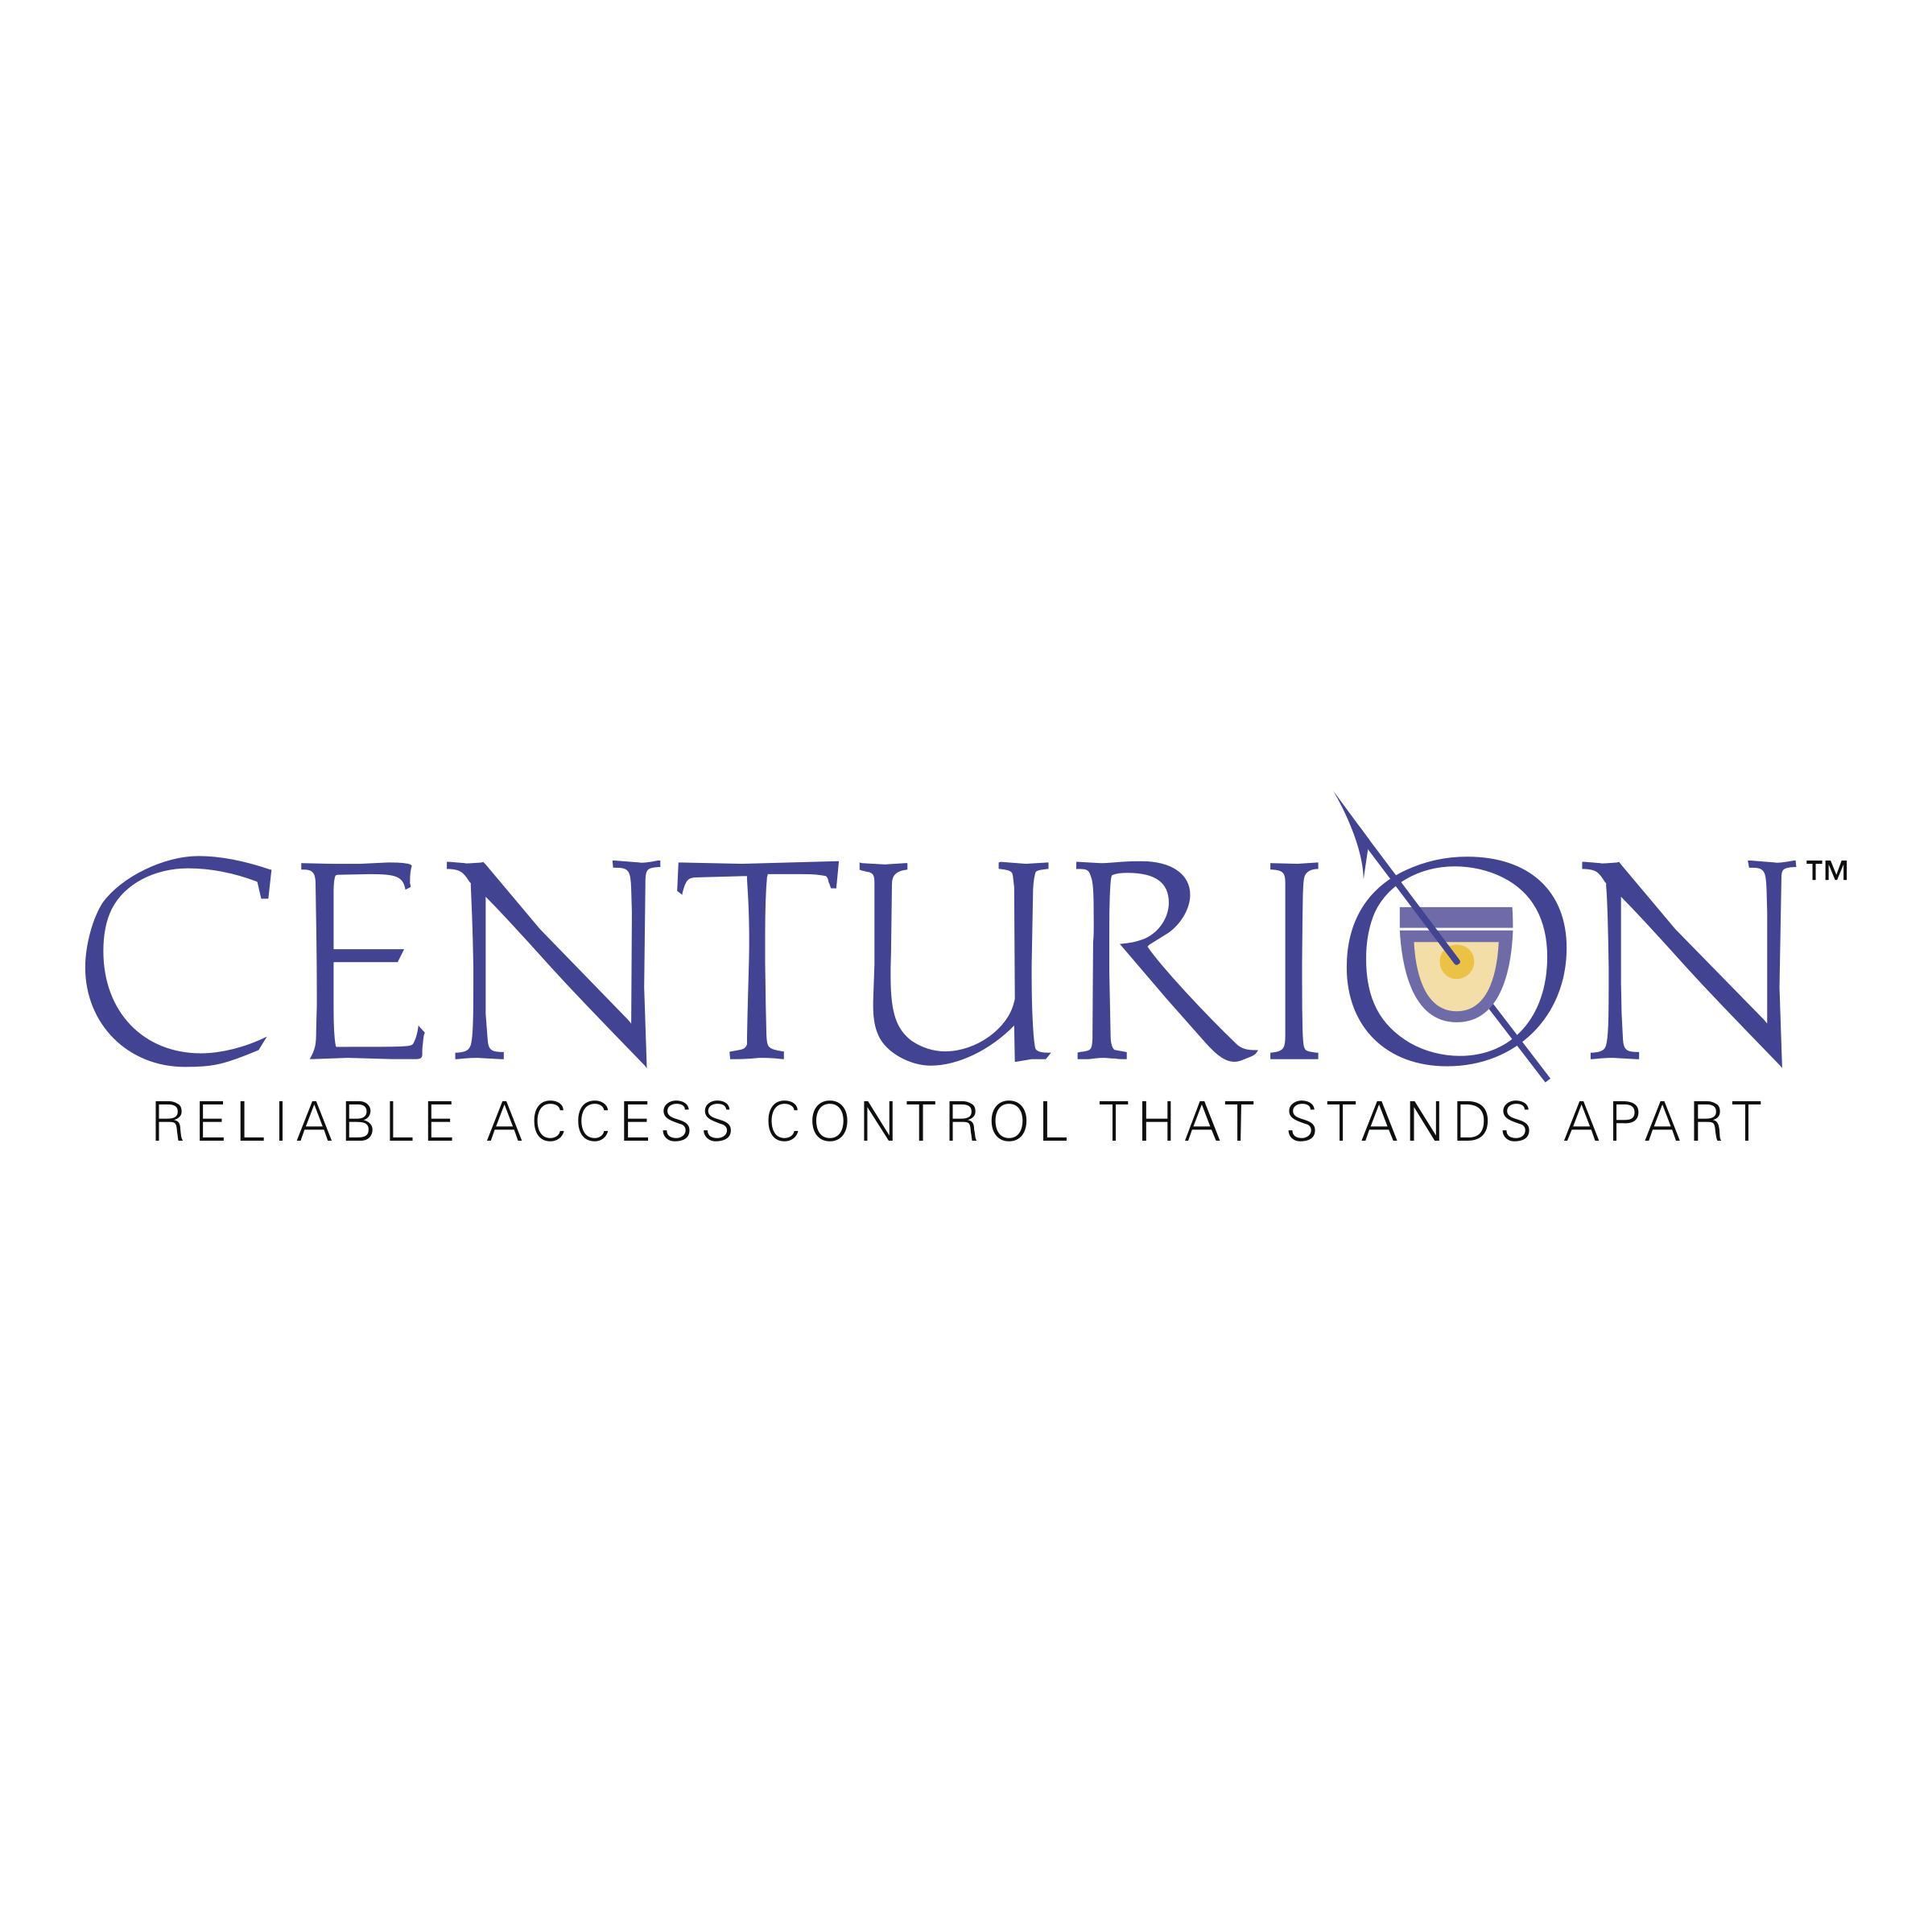 Centurian Logo - Centurion Logo PNG Transparent & SVG Vector - Freebie Supply